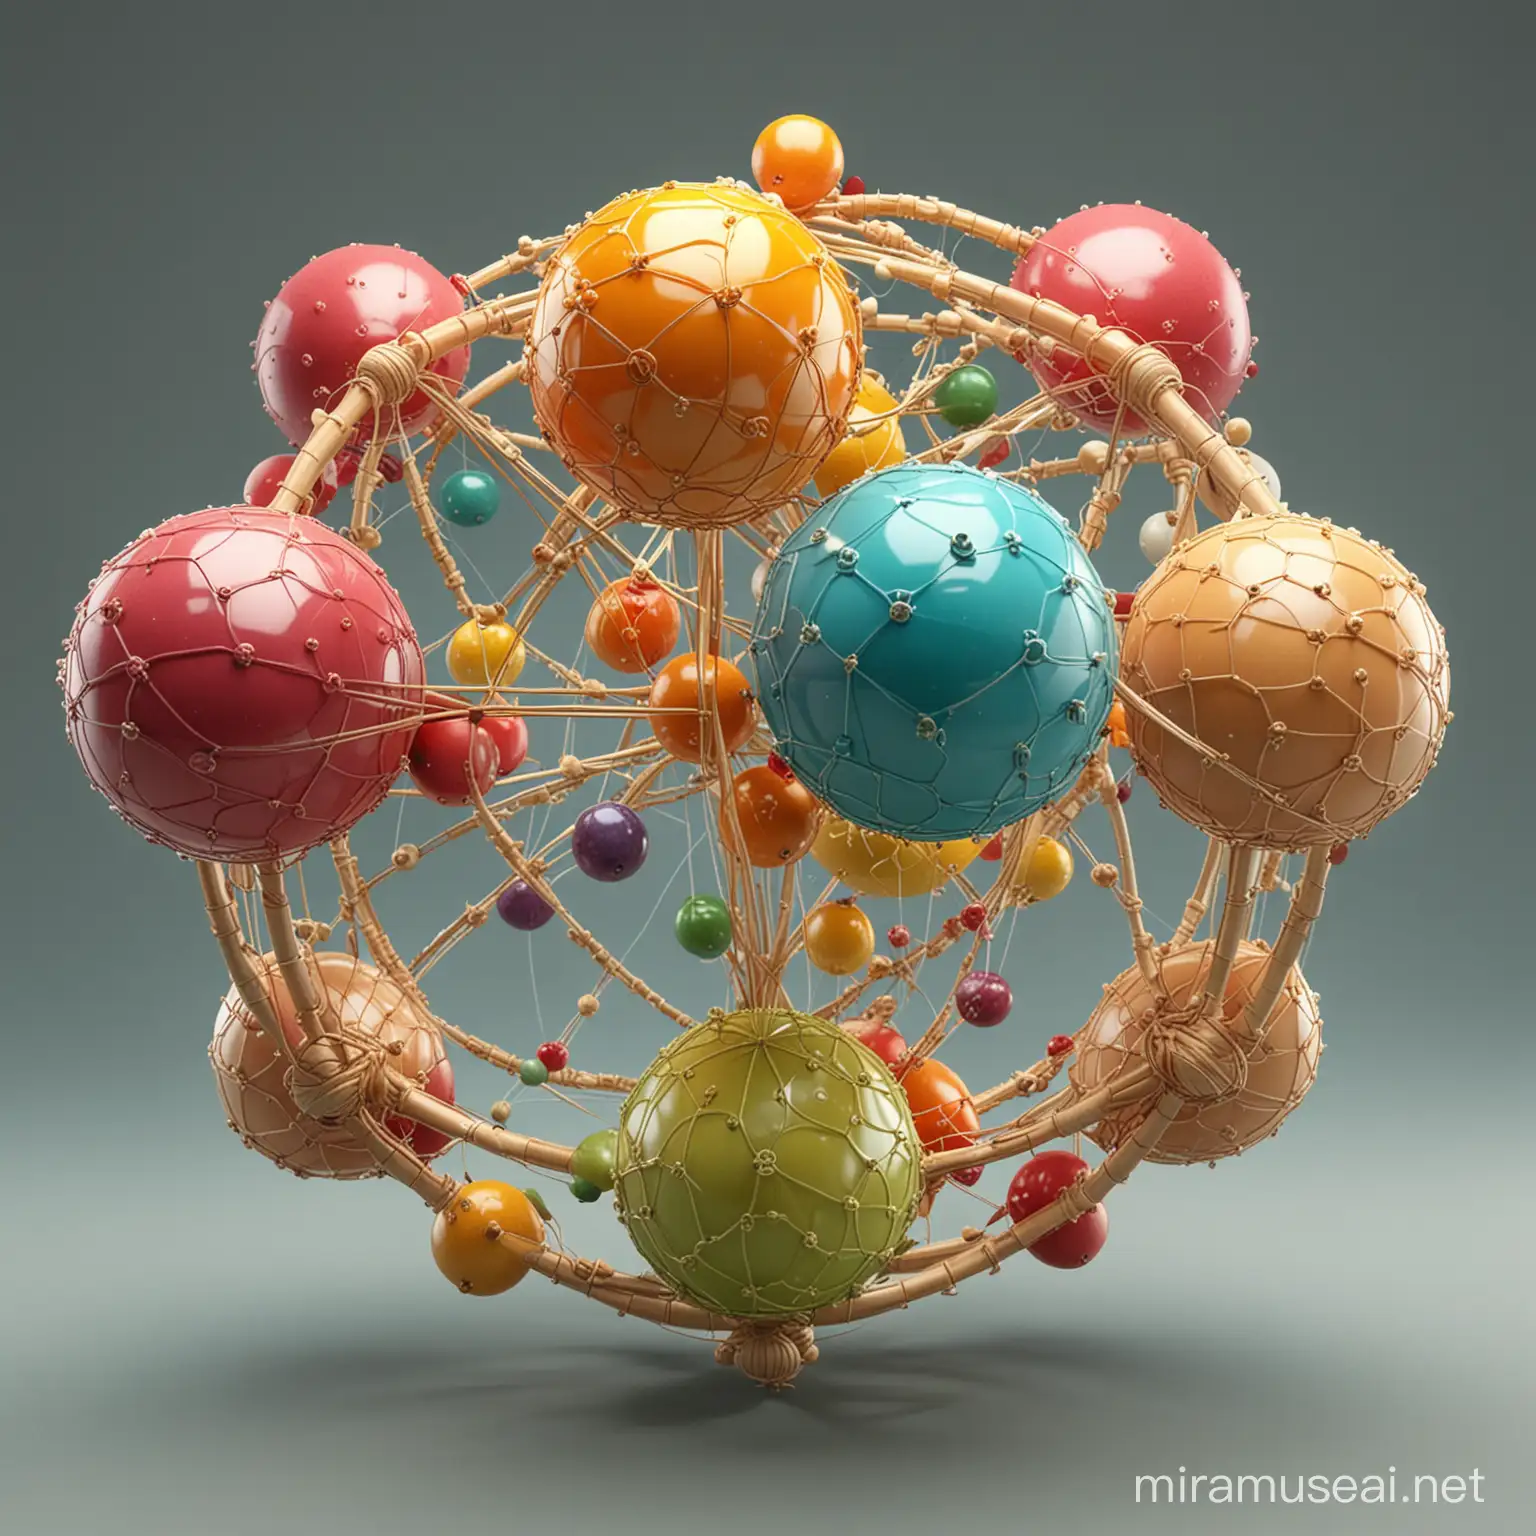 Interlocking Spheres Forming the Fruit of Life